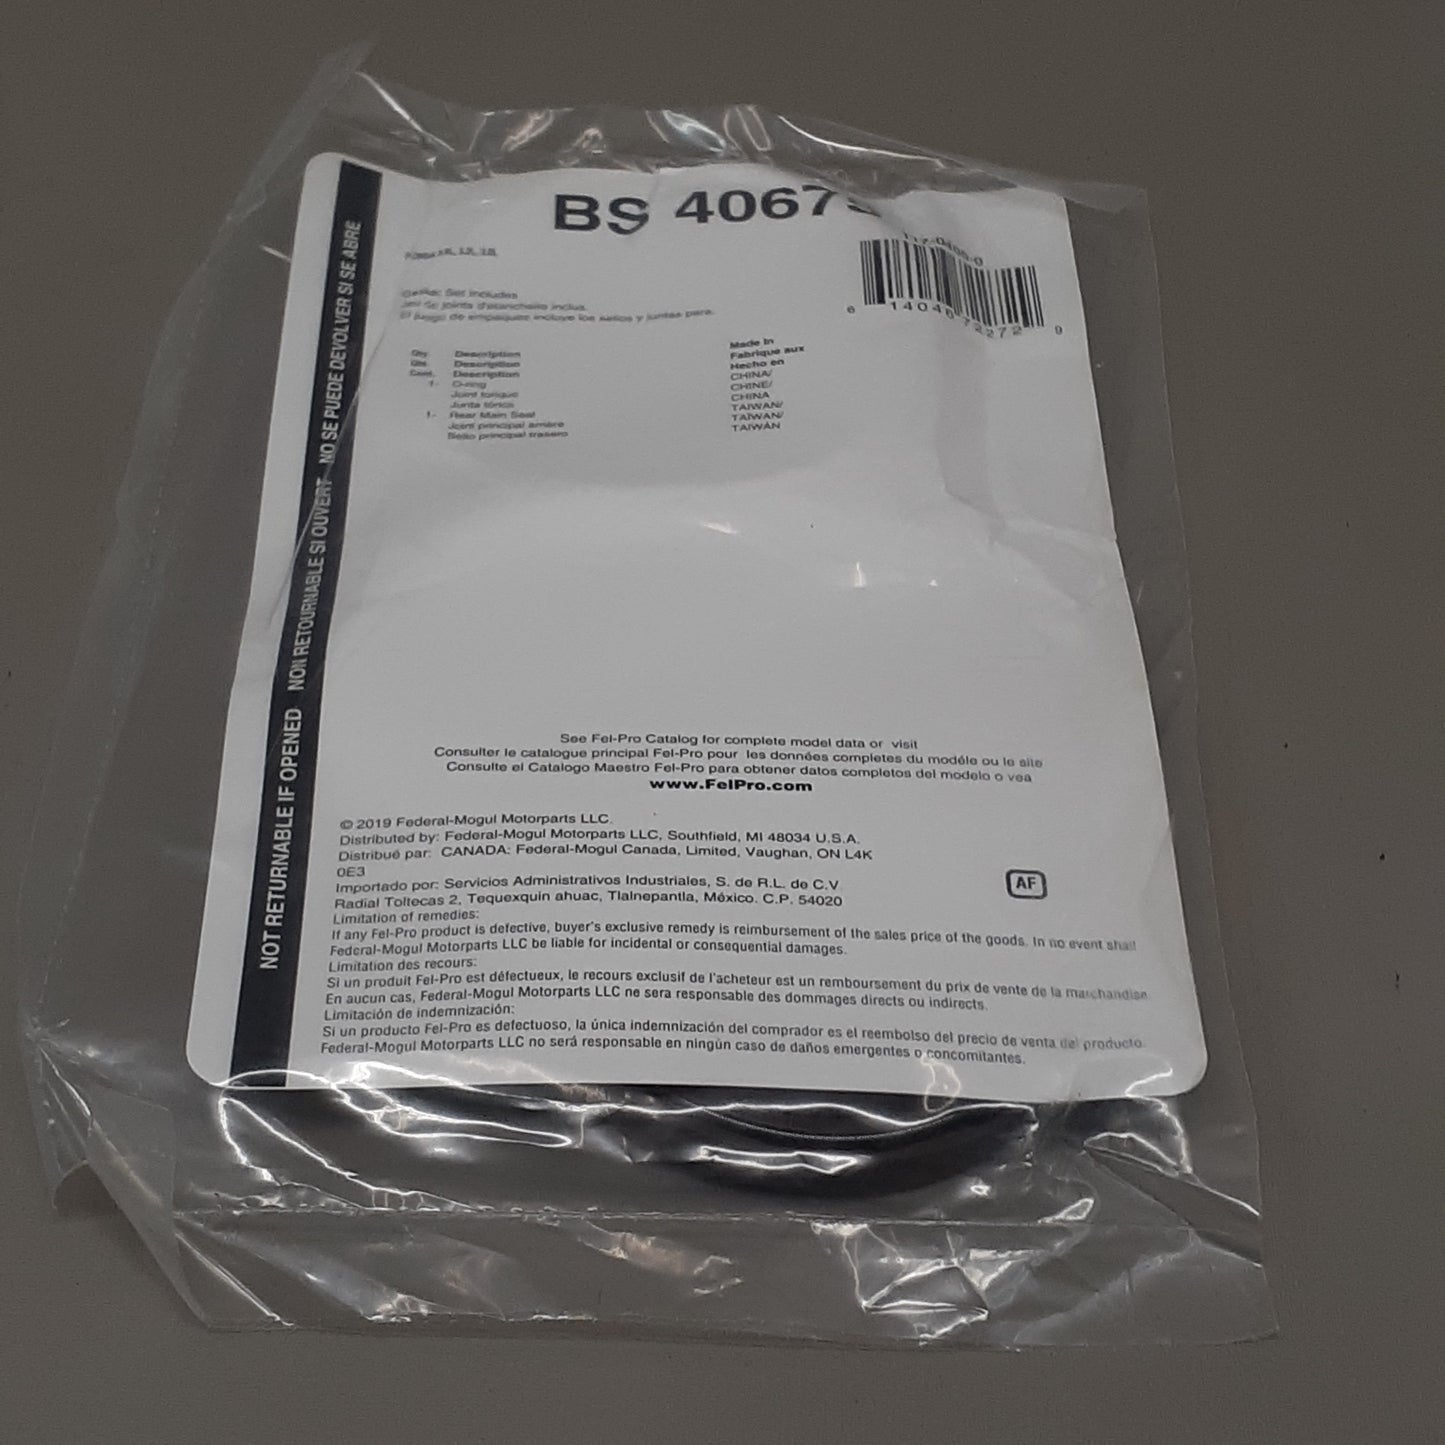 FEL-PRO Rear Main Seal Set BS40675 (New)